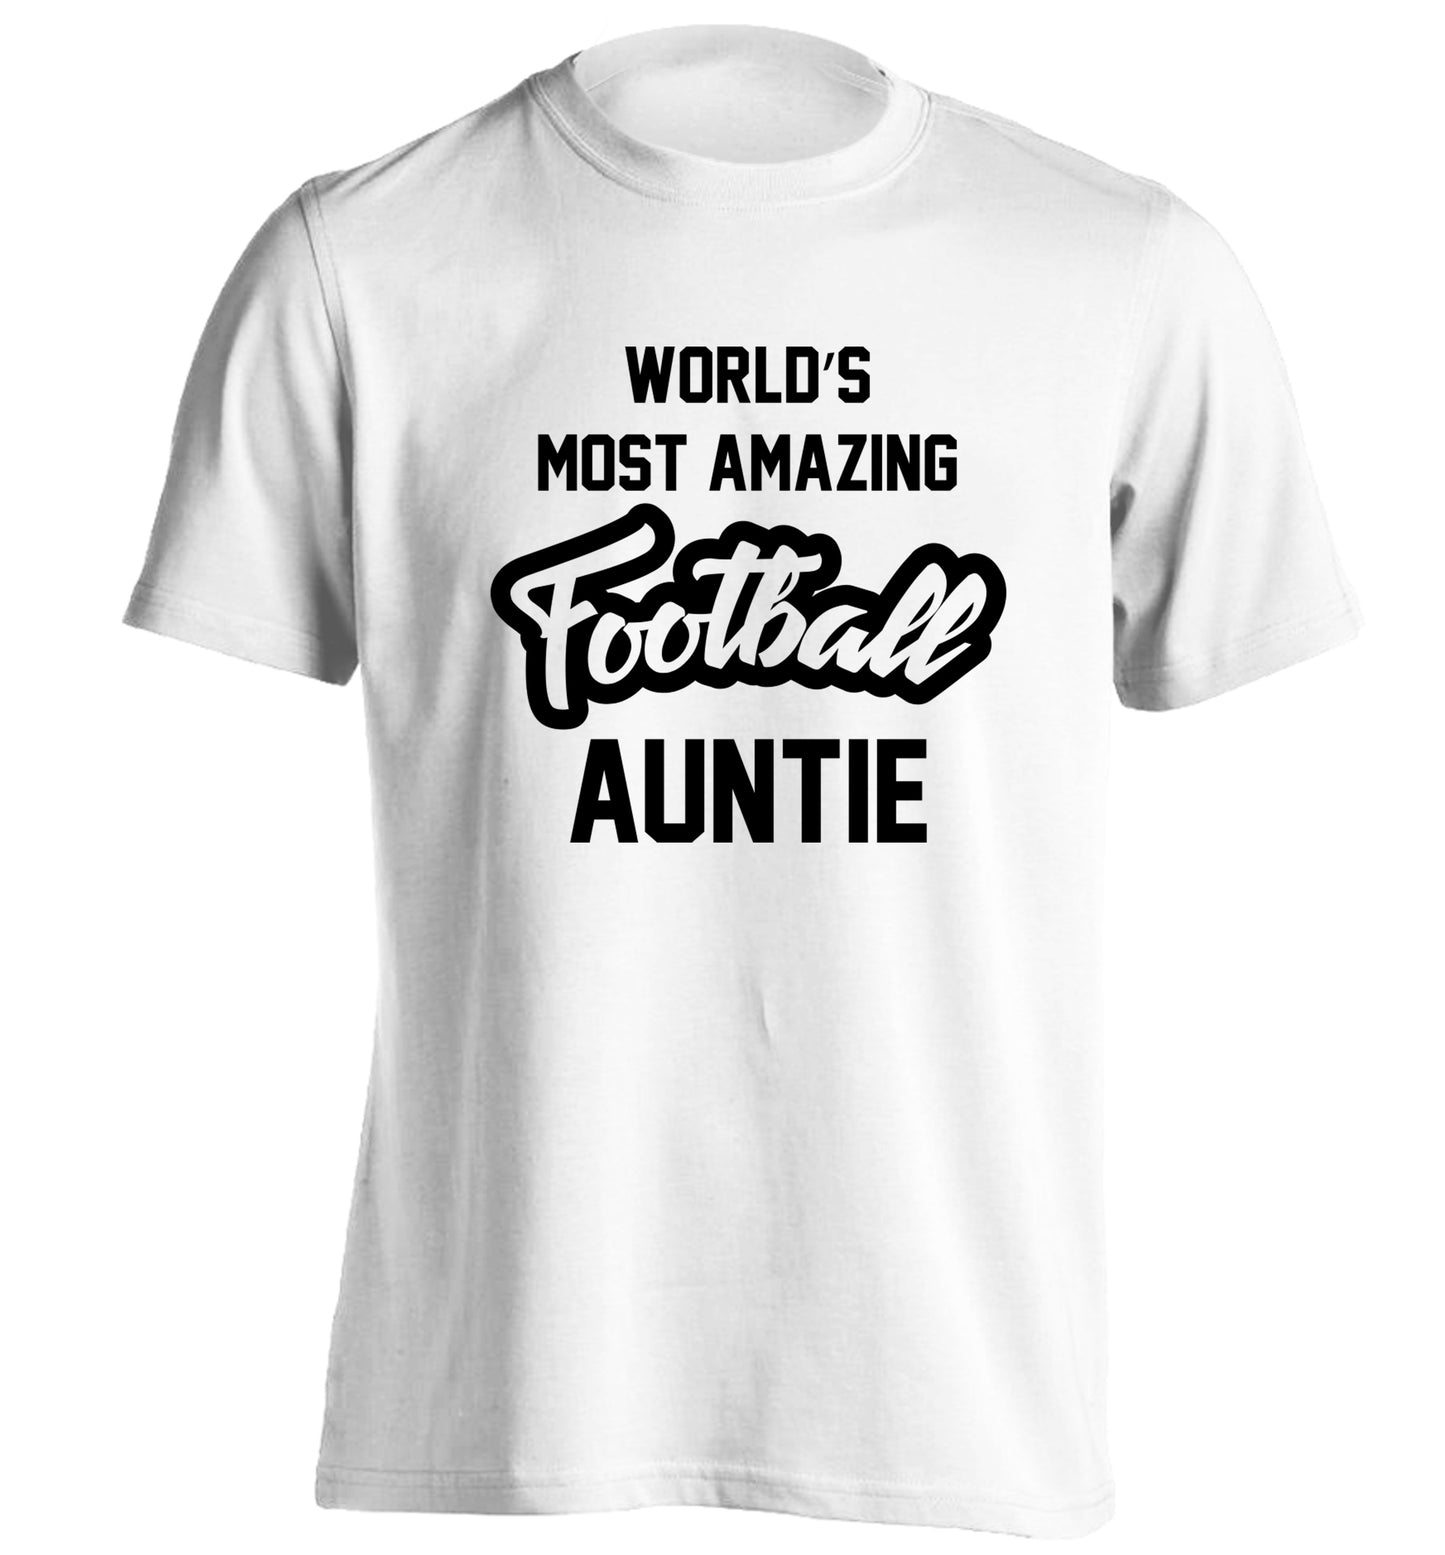 Worlds most amazing football auntie adults unisexwhite Tshirt 2XL